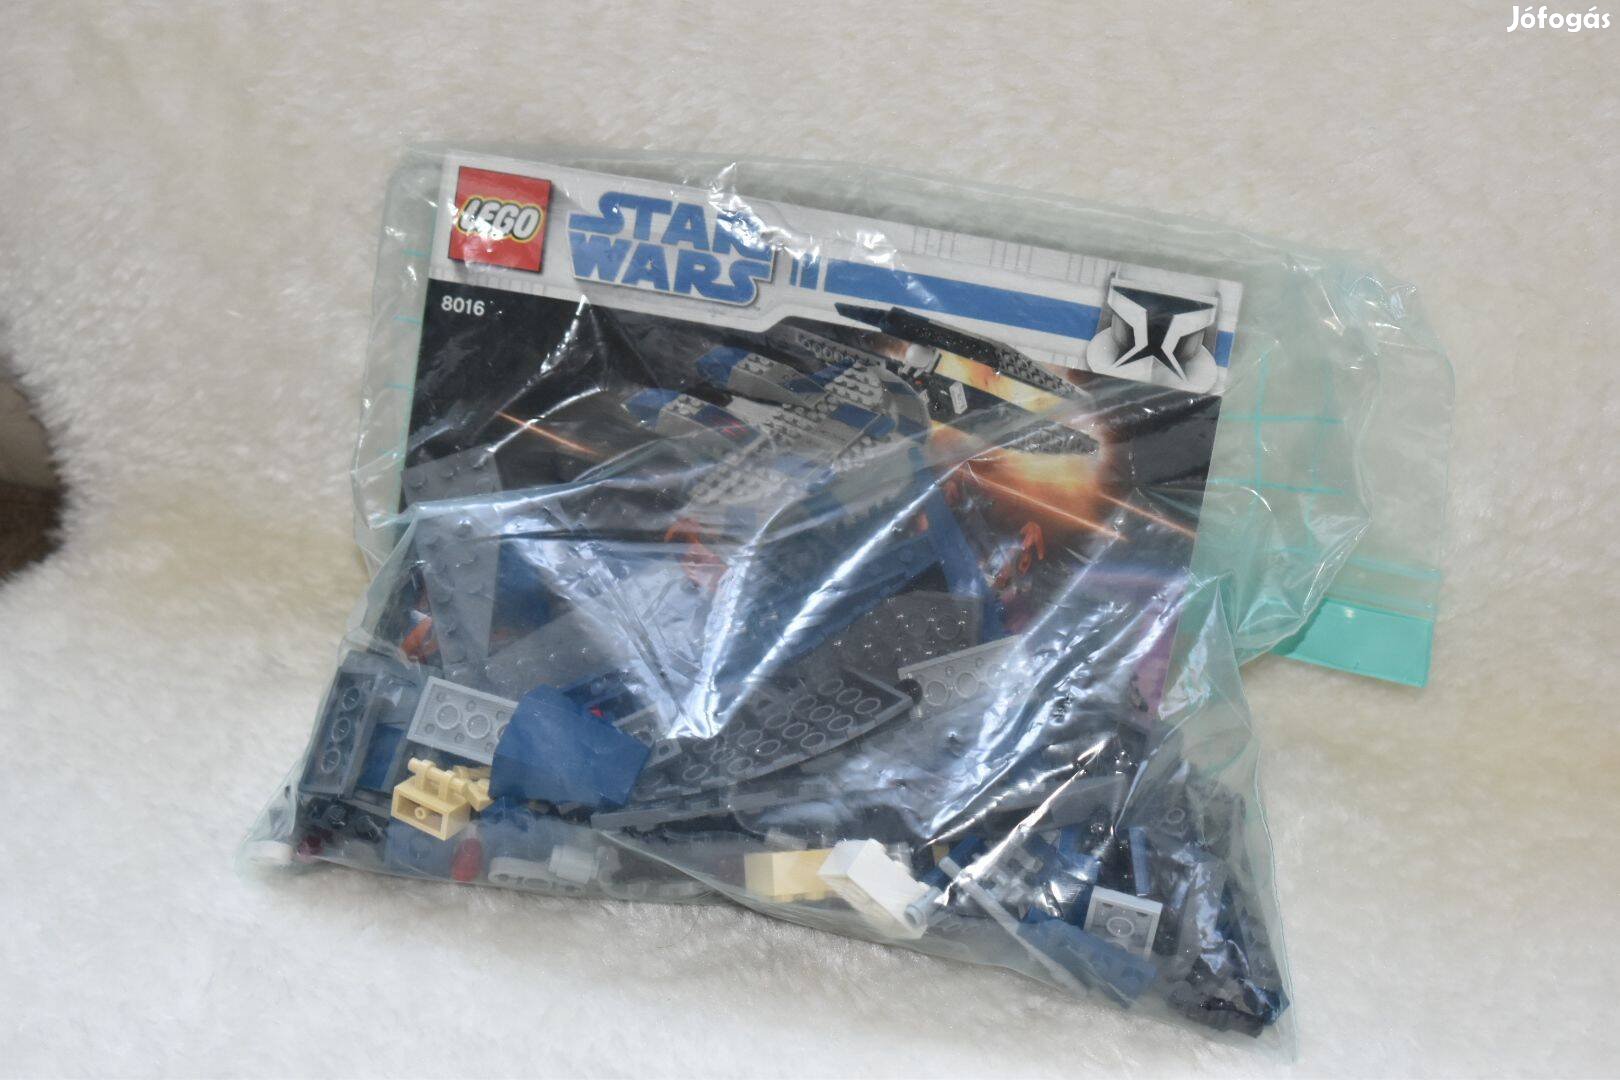 Lego Star Wars 8016 (Hyena Droid)